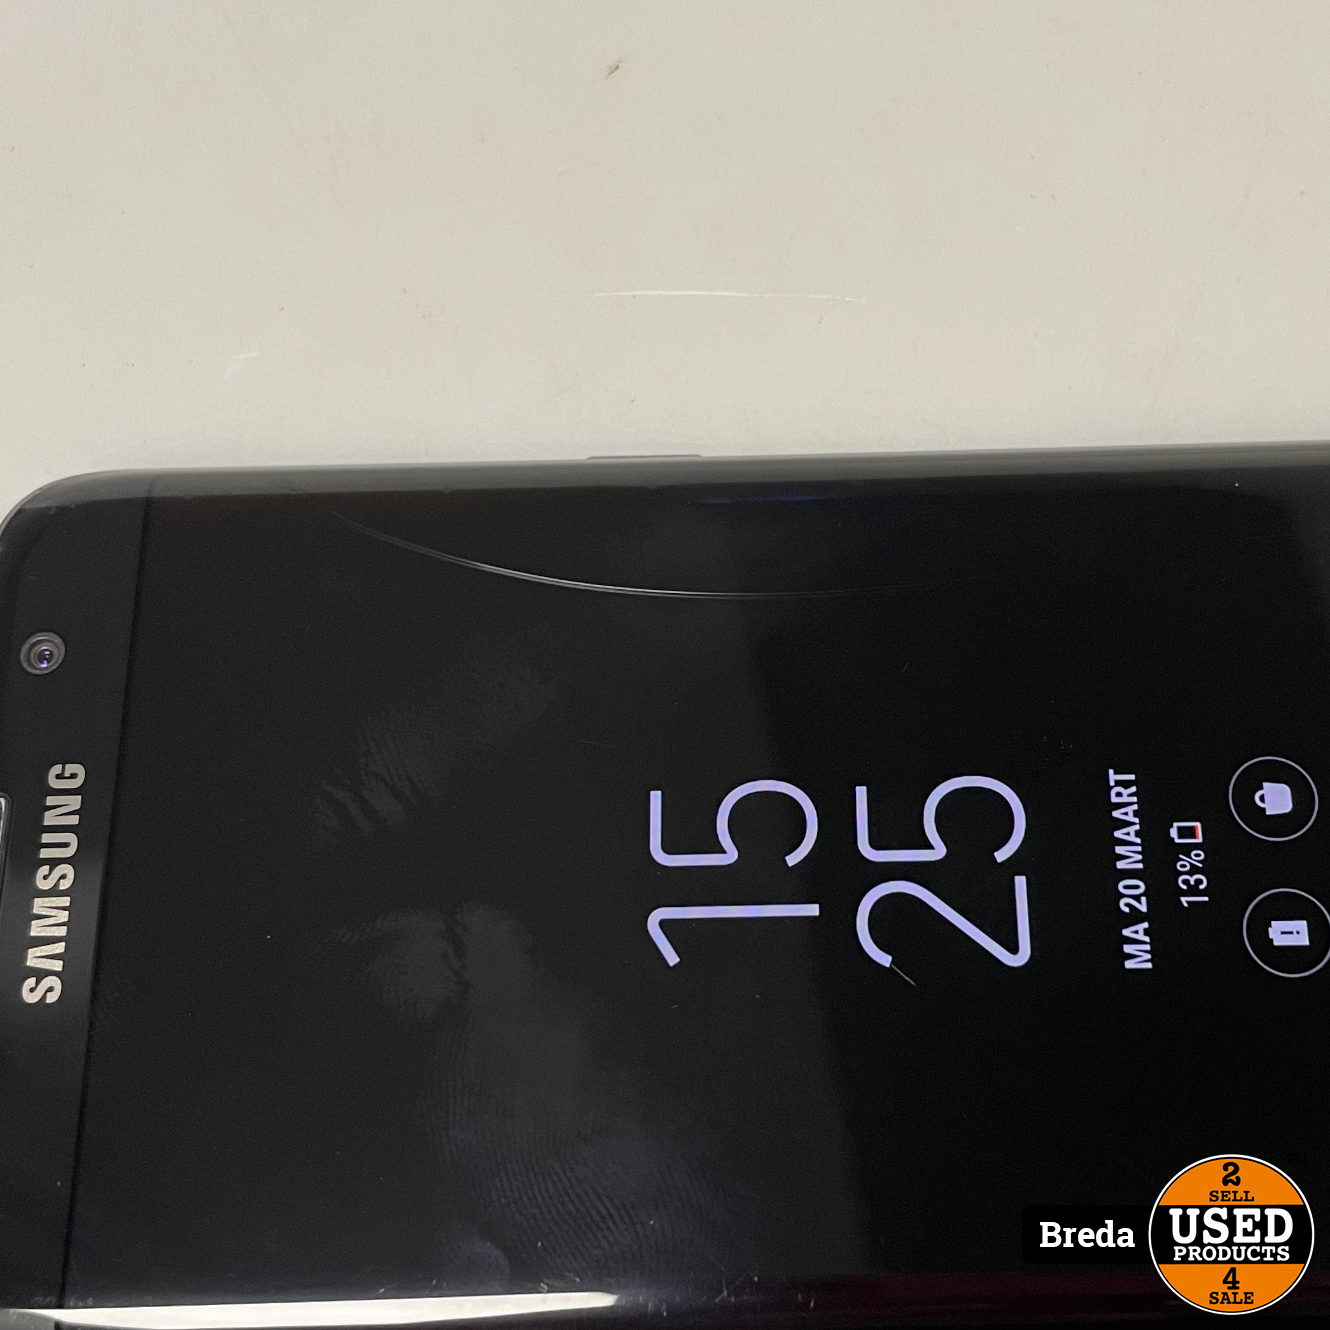 Plateau Goedkeuring Blind vertrouwen Samsung Galaxy S7 Edge 32GB Zwart | Met schade | In doos | Oude Android |  Met garantie - Used Products Breda